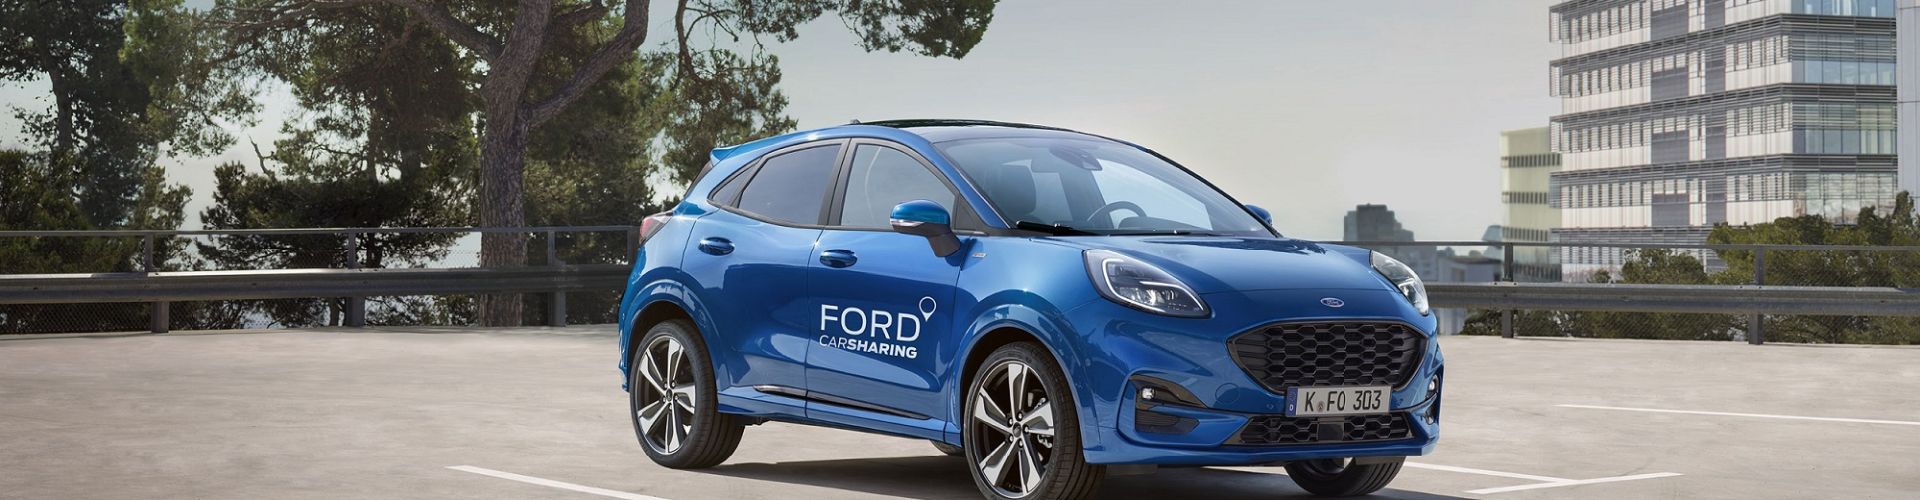 FCS Ford Carsharing Motiv 2